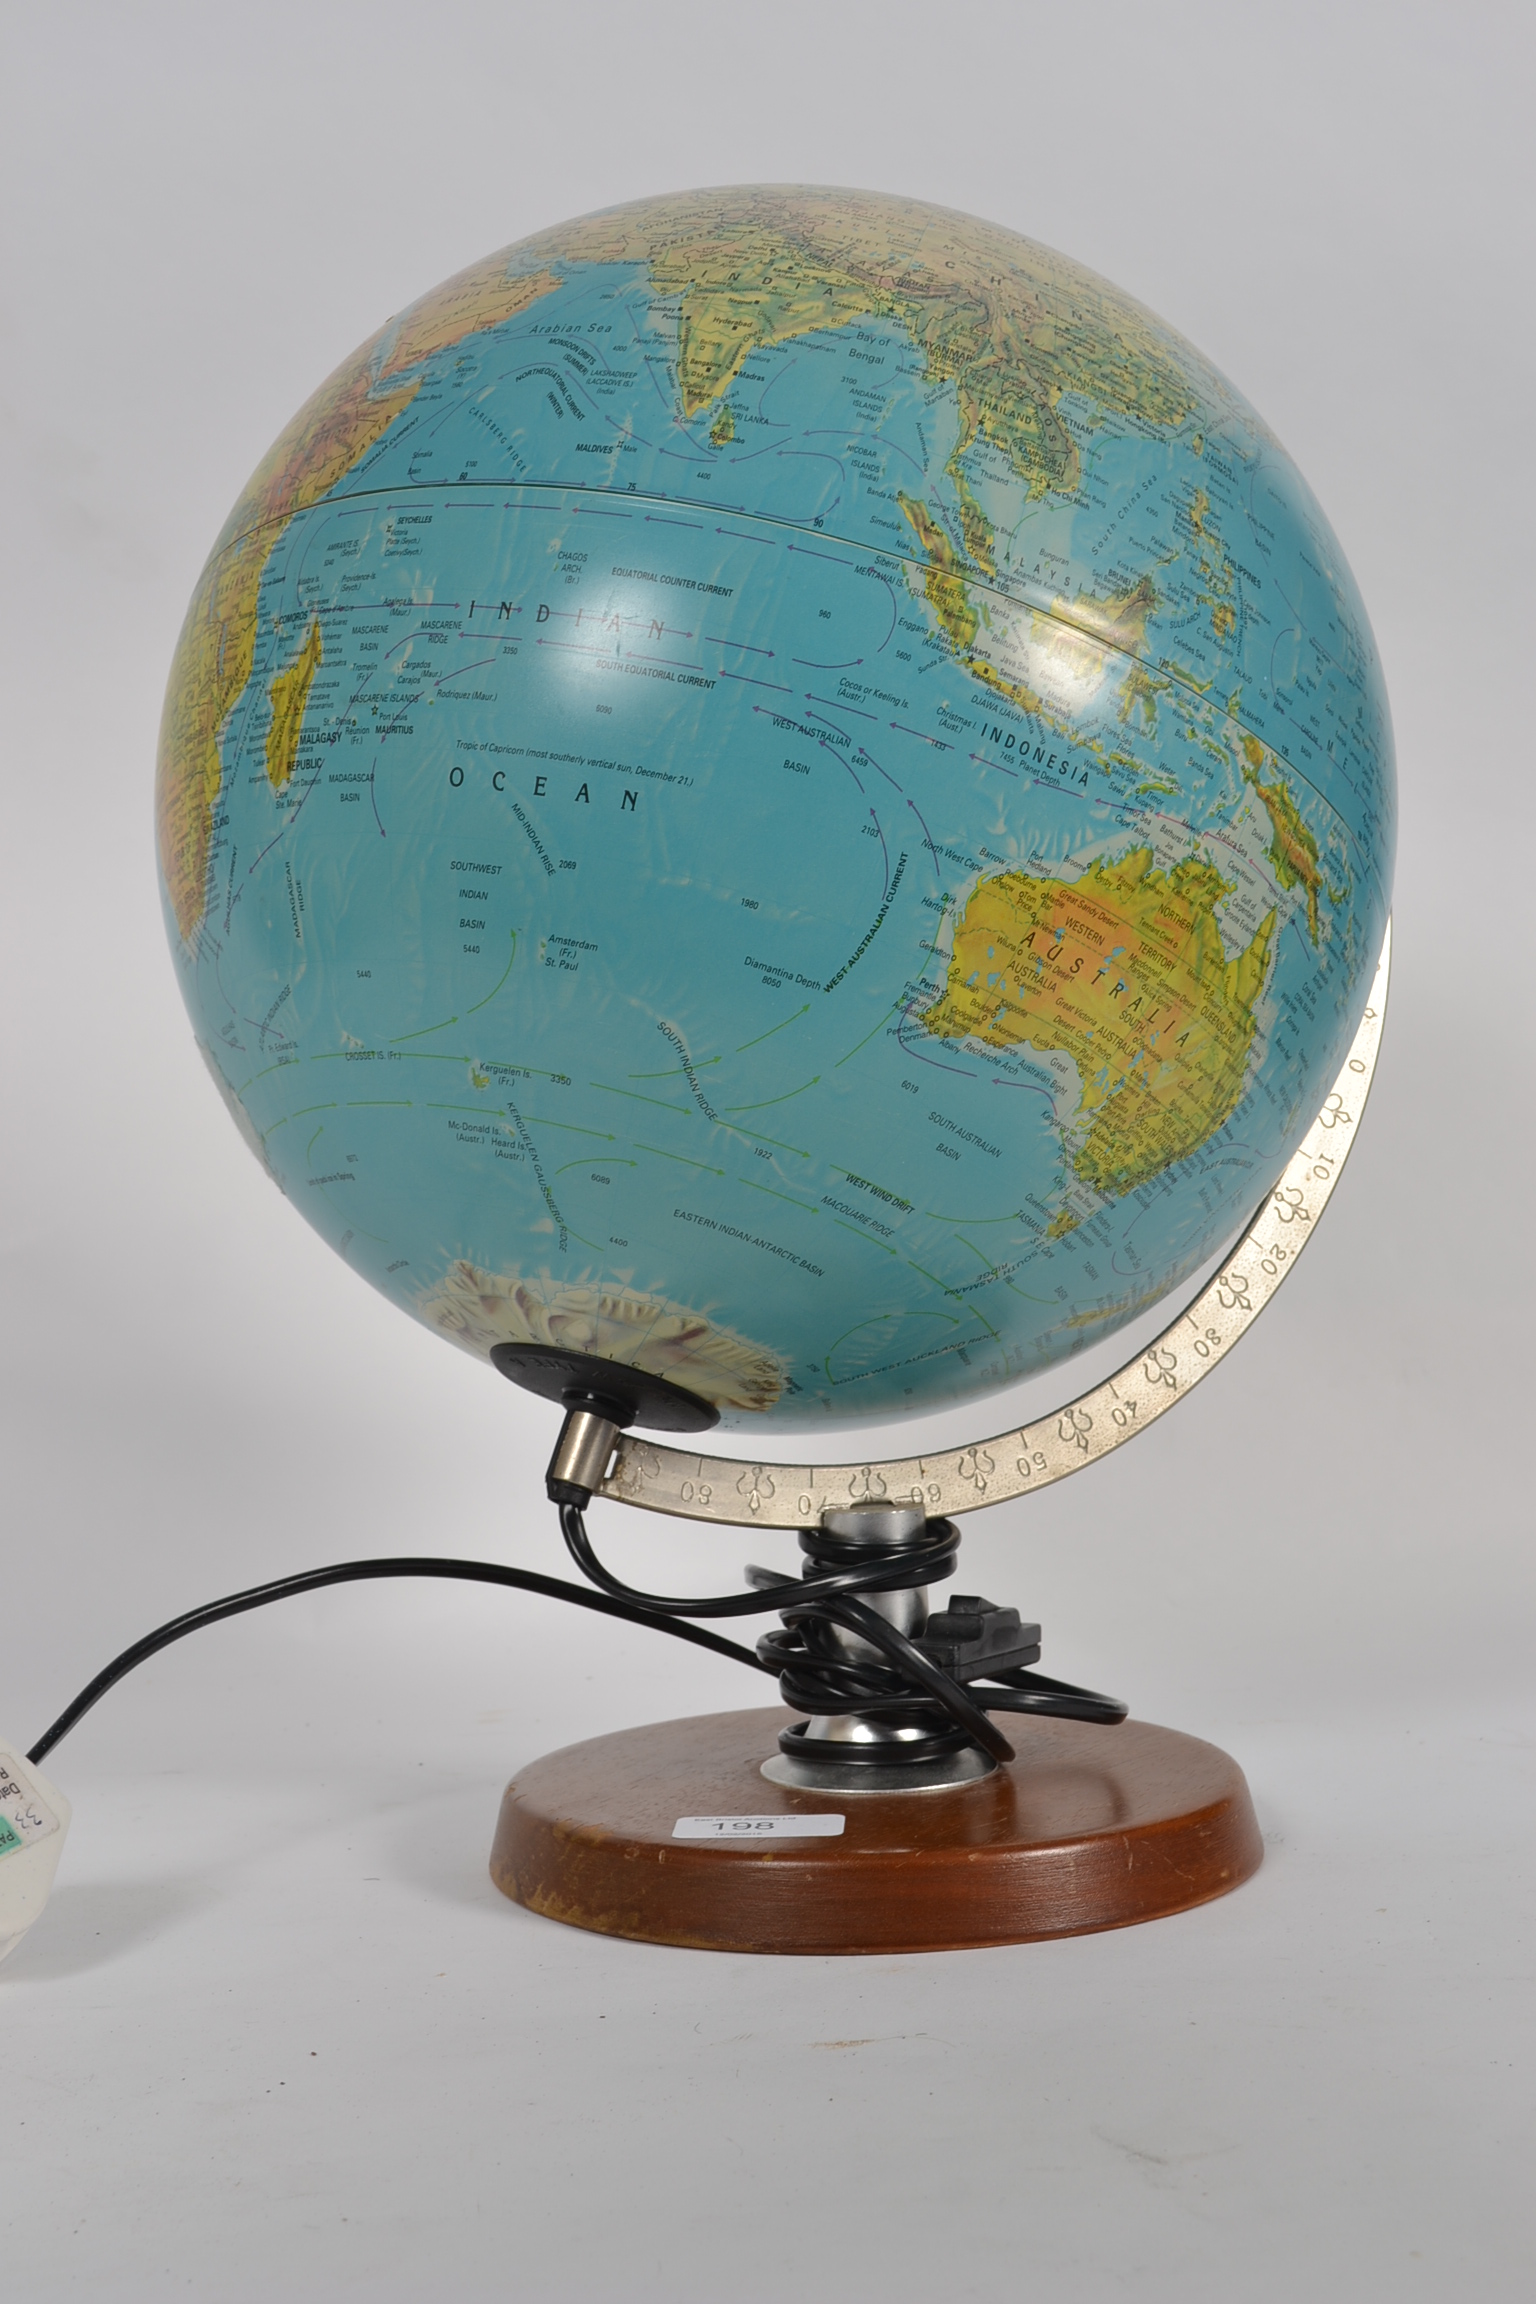 A vintage styled Globe lamp.